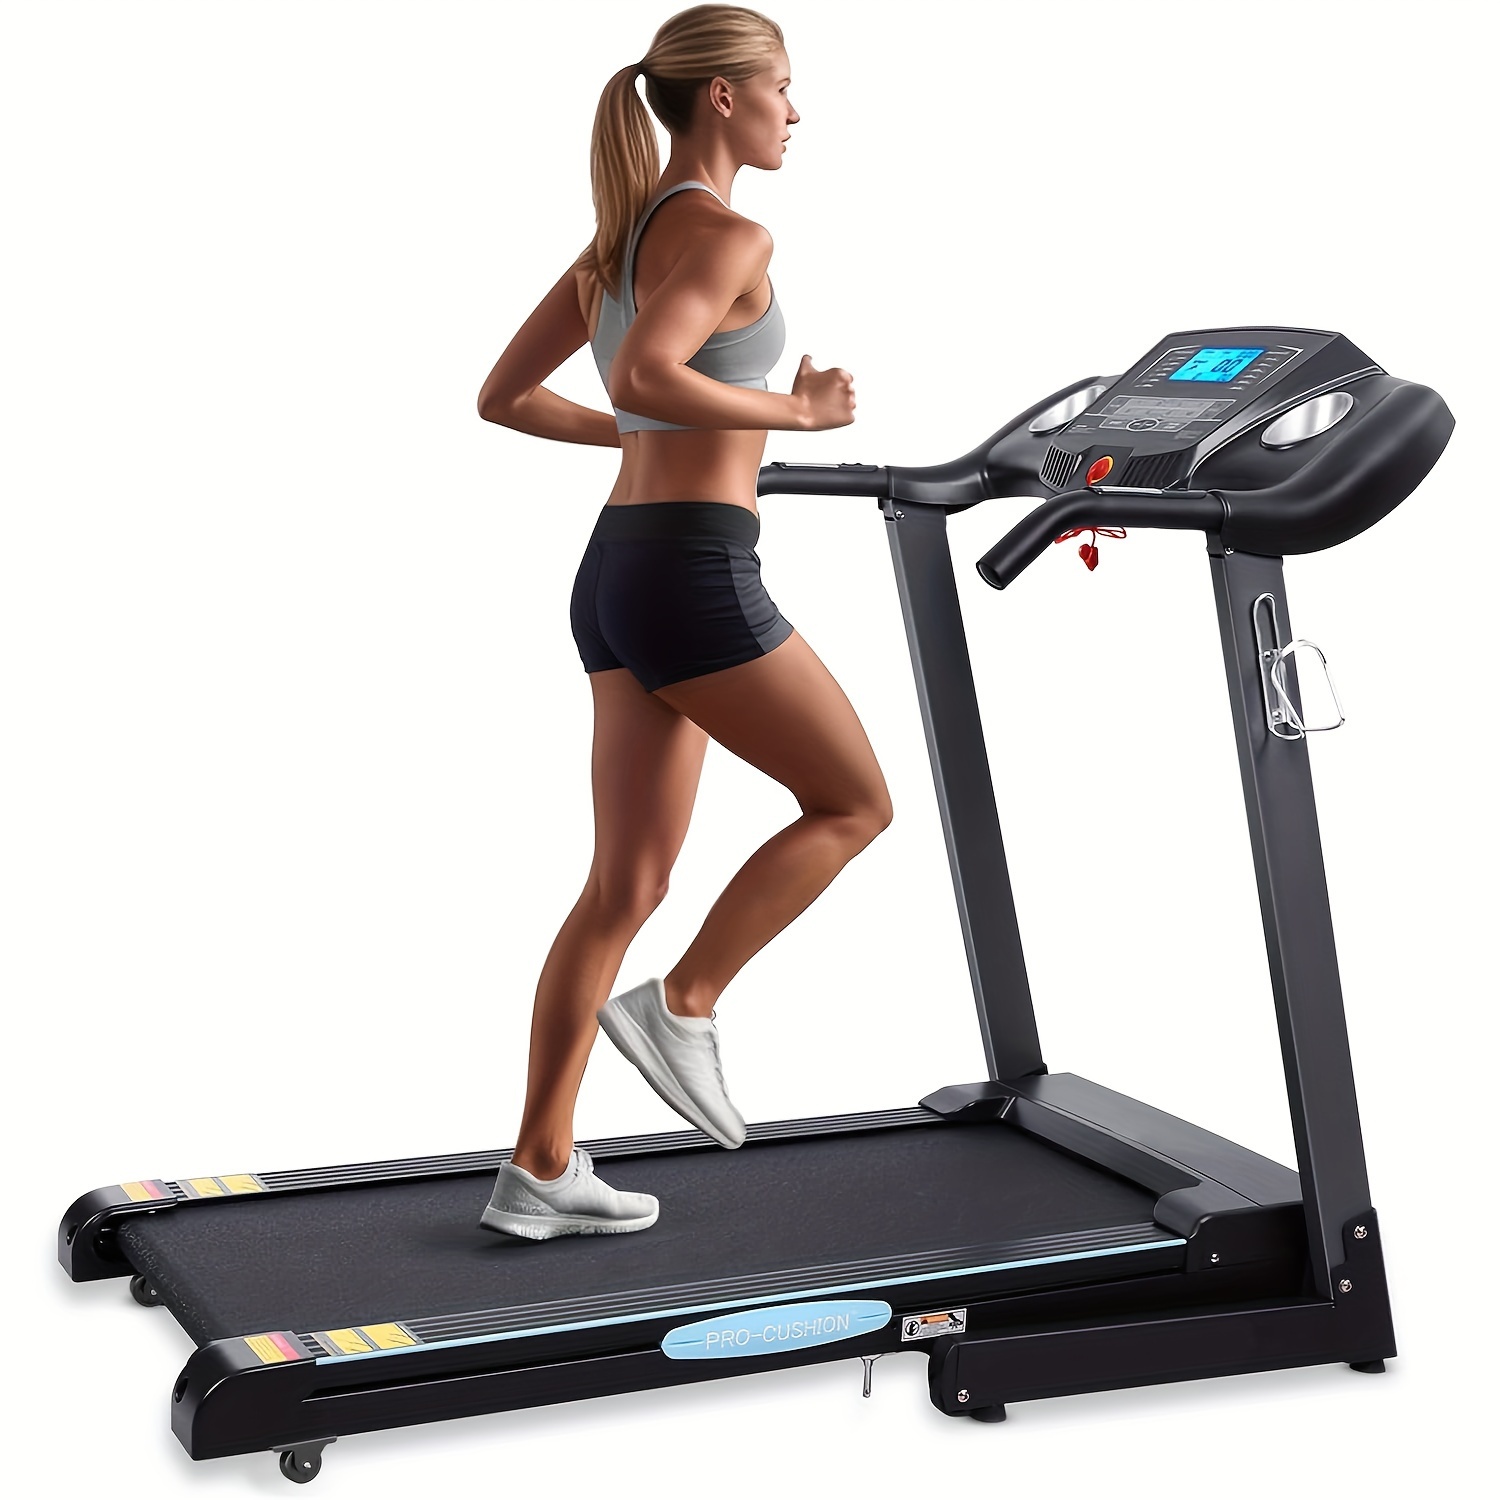 

Folding Treadmill 12% Incline Treadmill With Auto Incline 2.5 15 Preset For Home Use 8.5 Mph Range